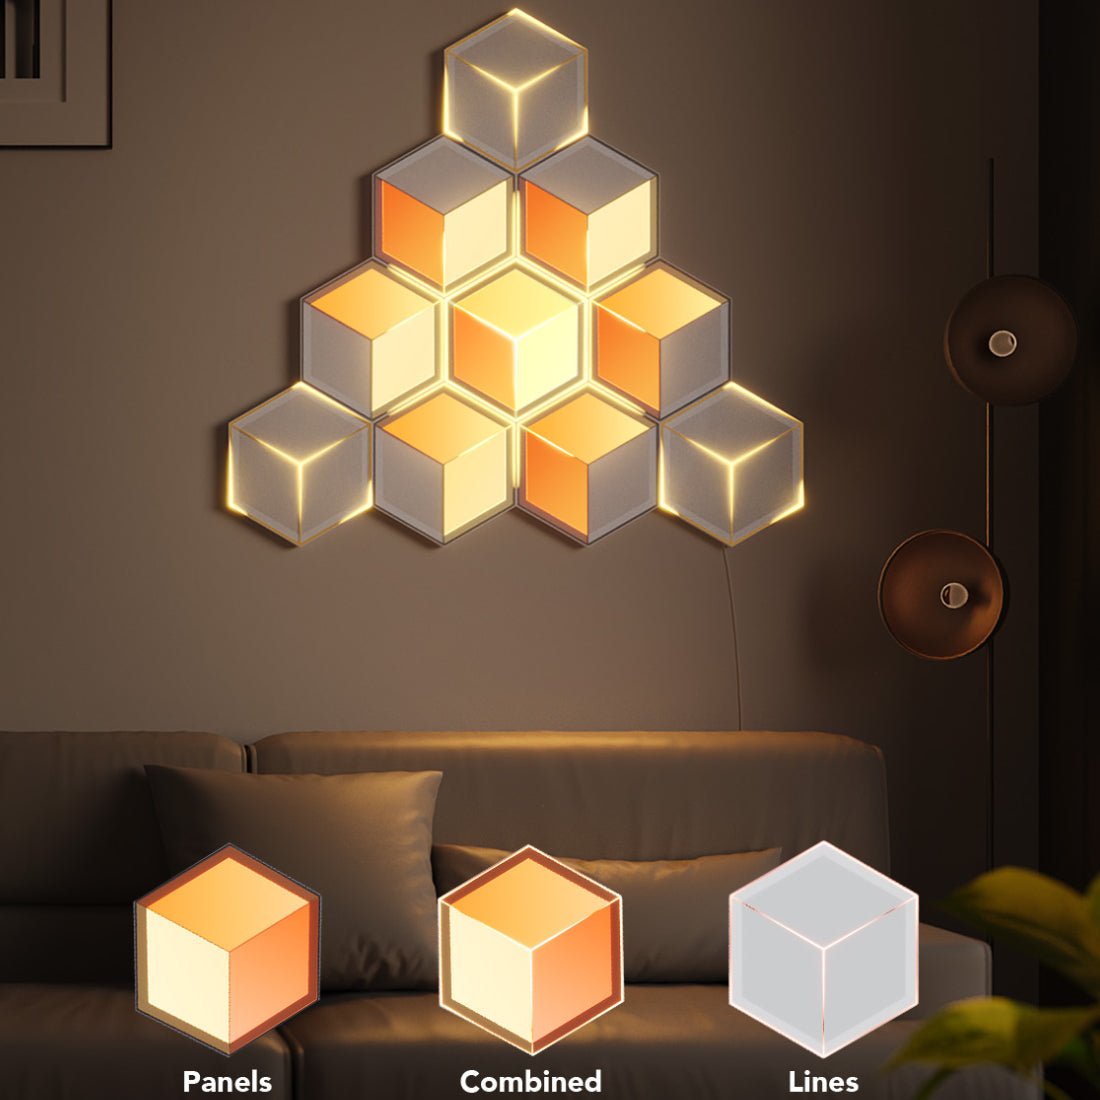 Govee Glide Hexagon Light Panels Ultra - 7 Pack - إضاءة - Store 974 | ستور ٩٧٤